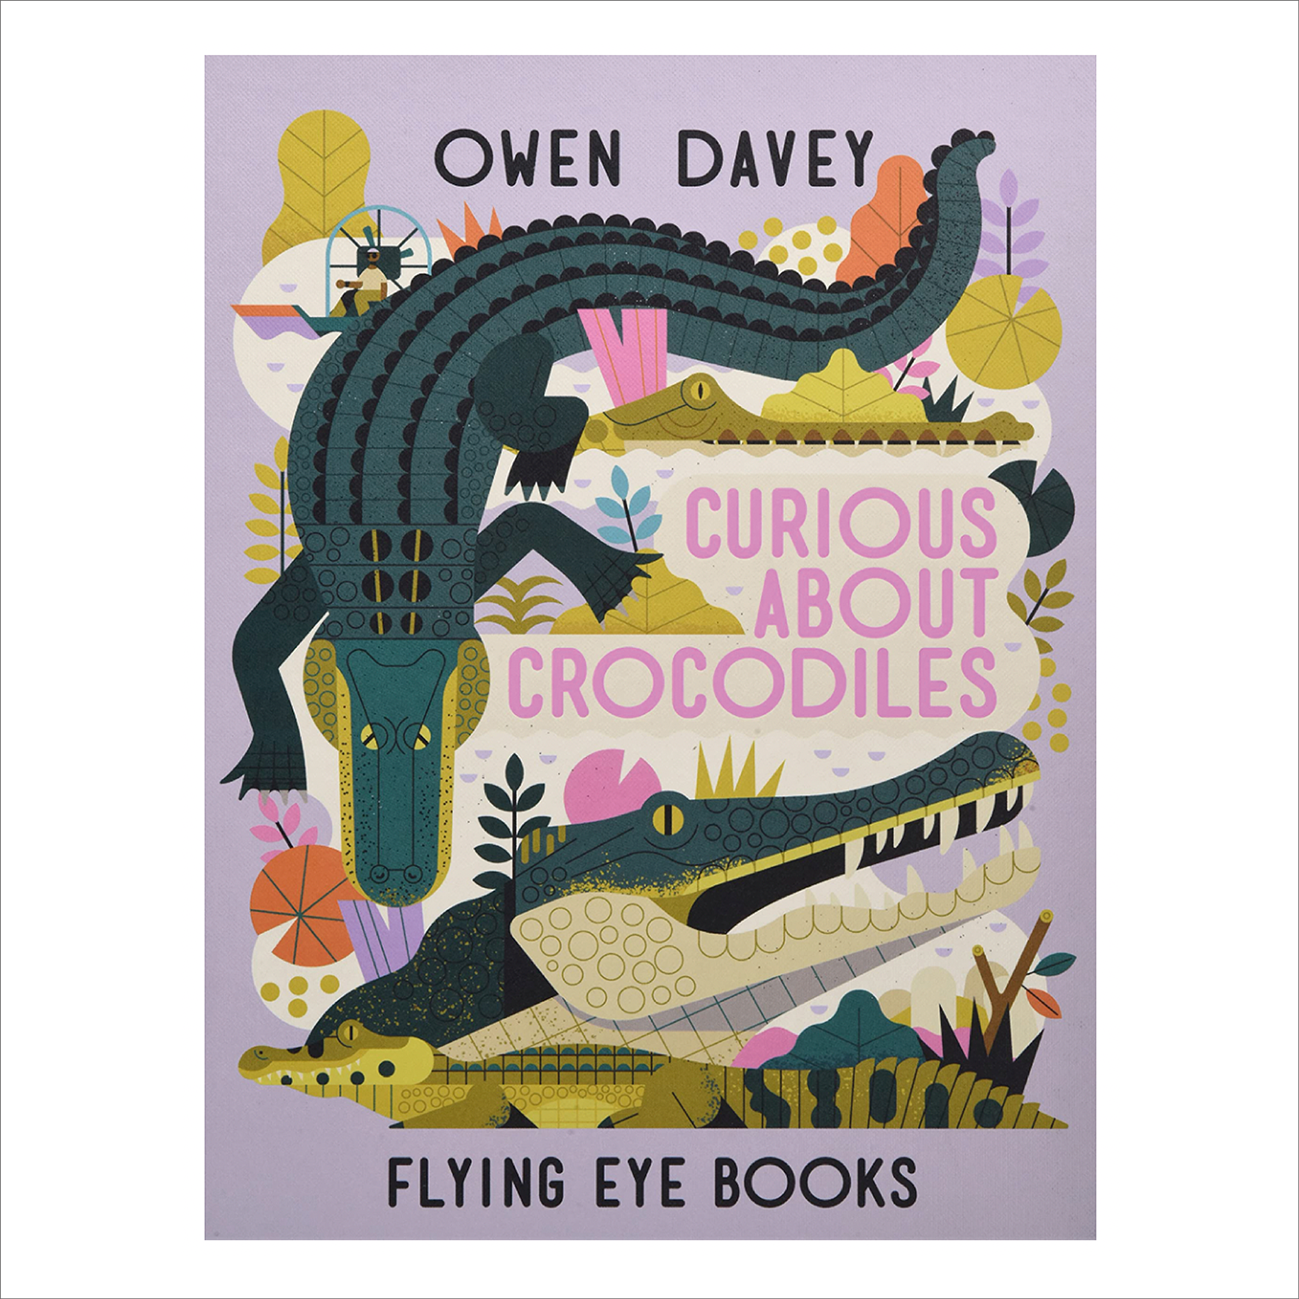 Curious About Crocodiles - Owen Davey